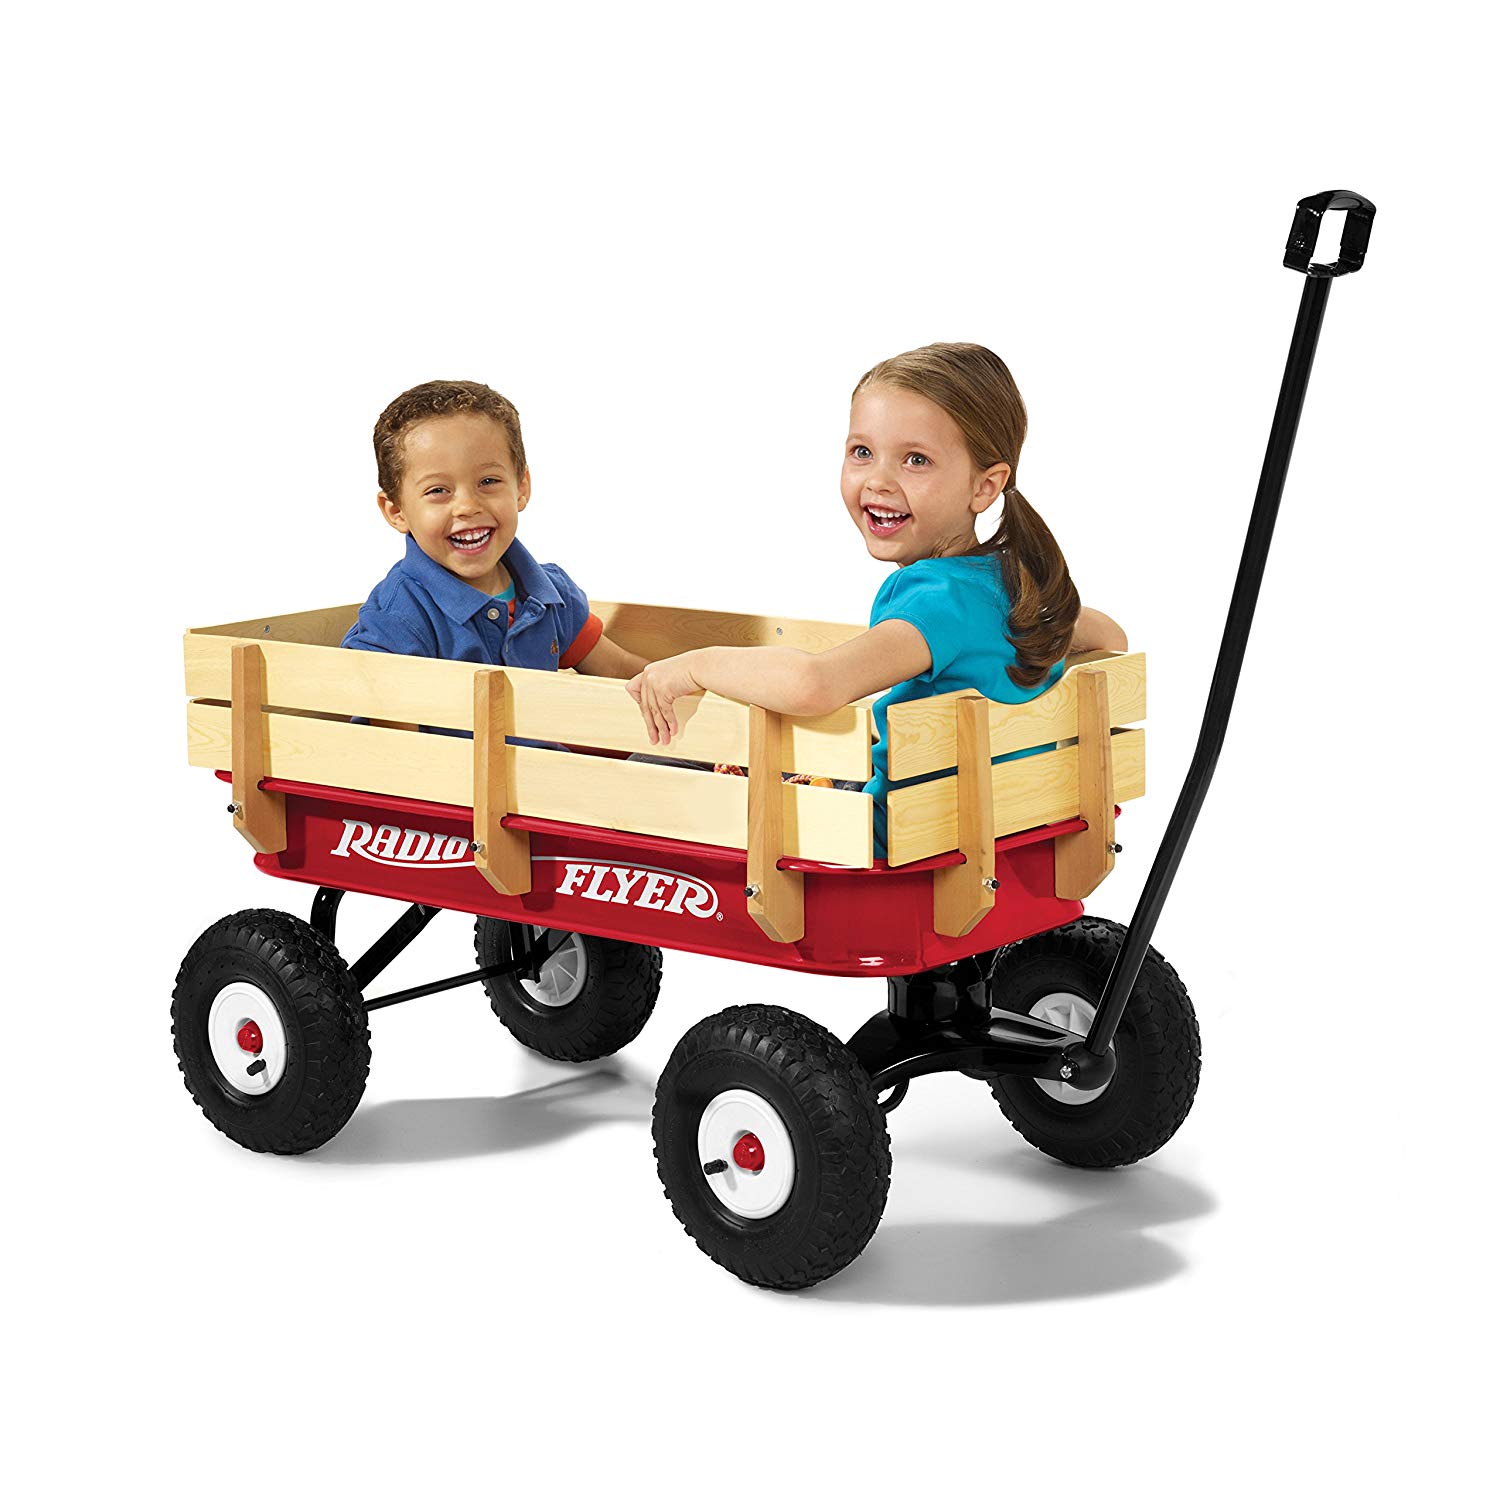 best beach wagon for baby